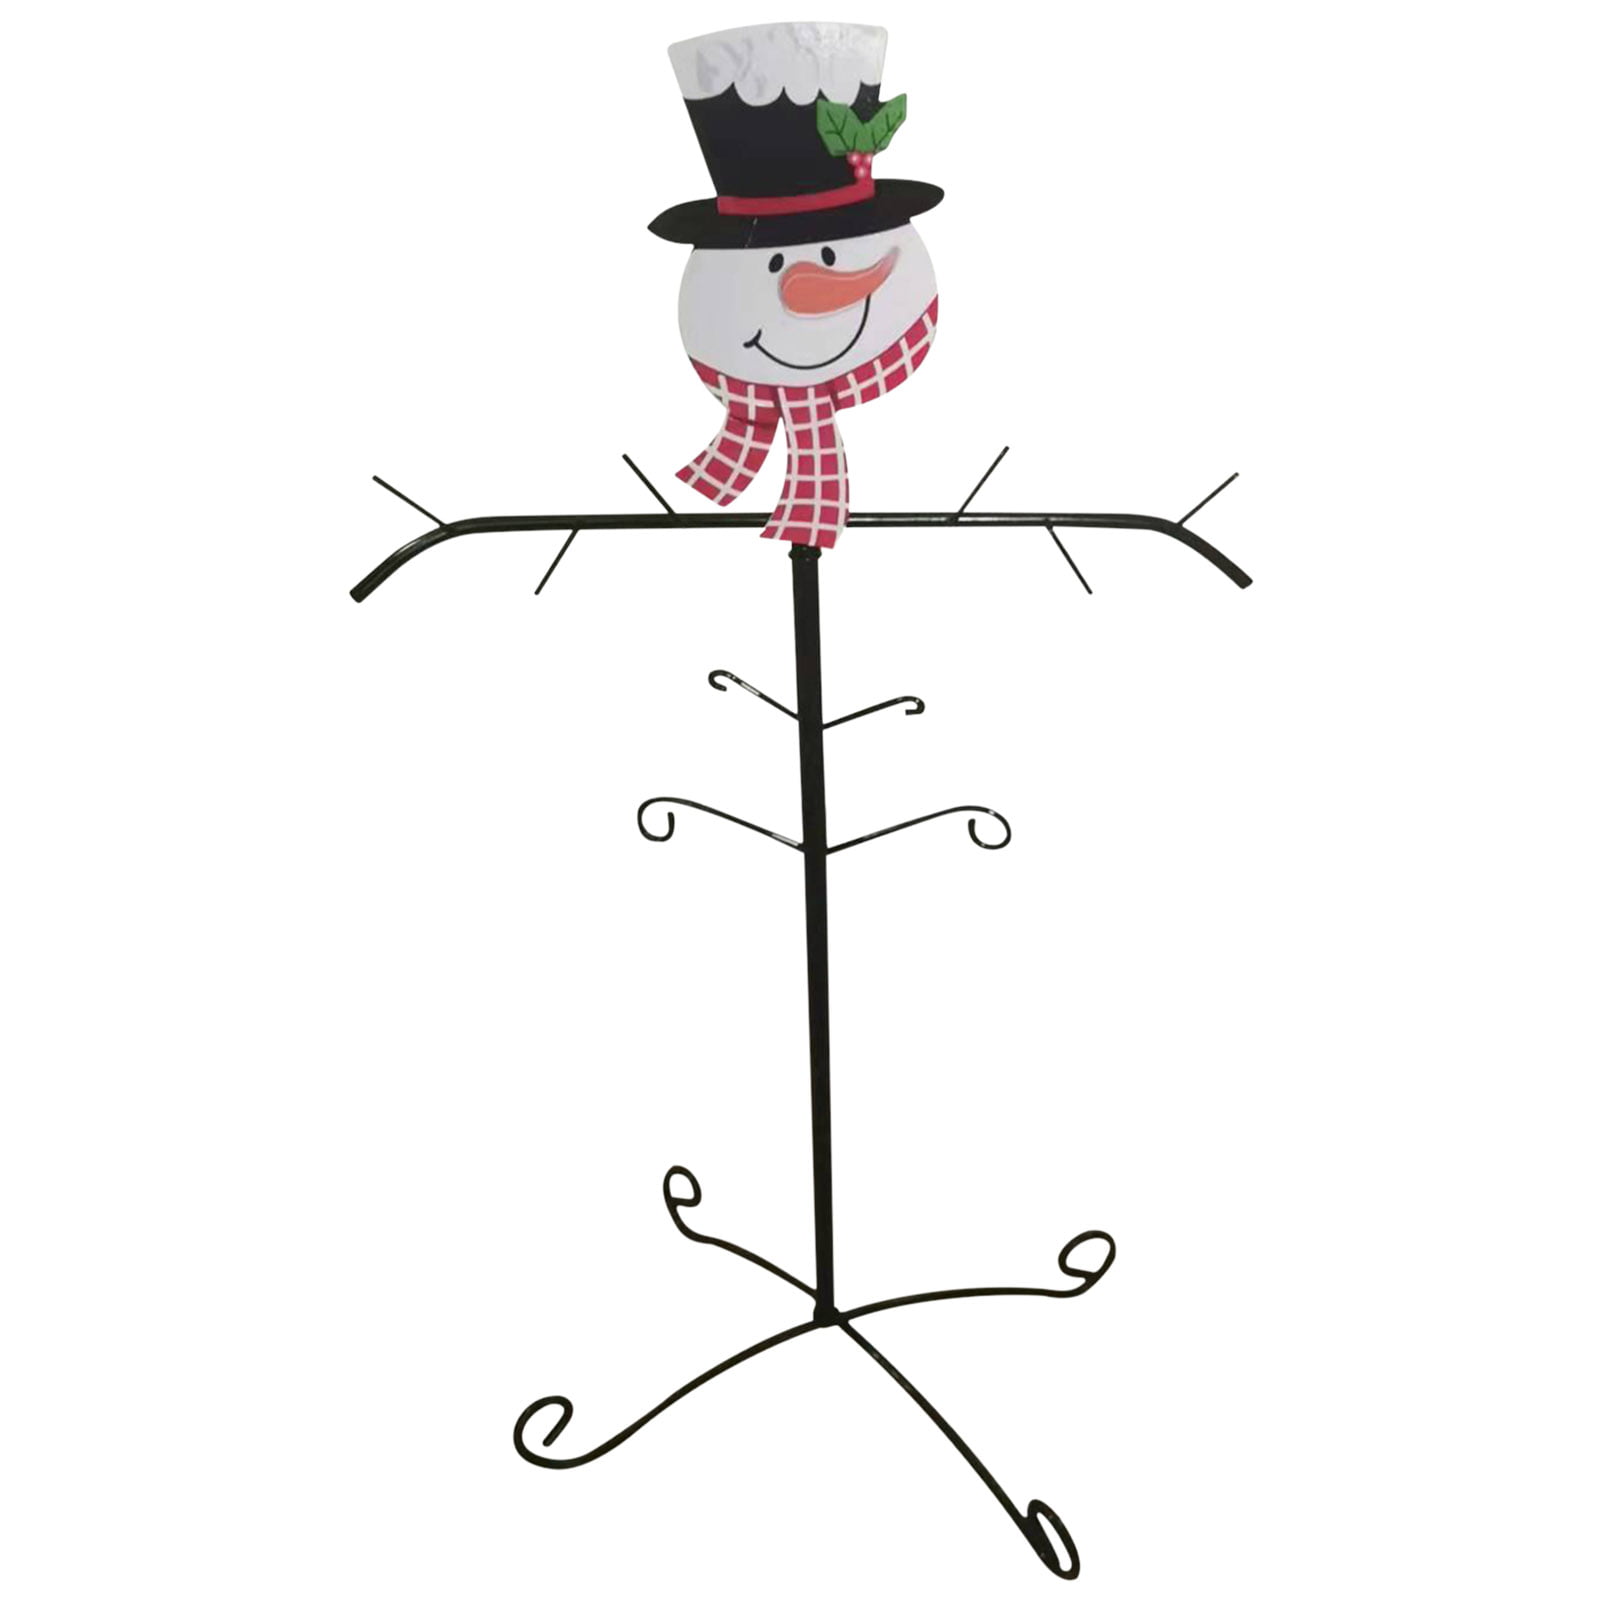 Besthua Christmas Stocking Holder Tree Branch Shape Sock Stand Metal